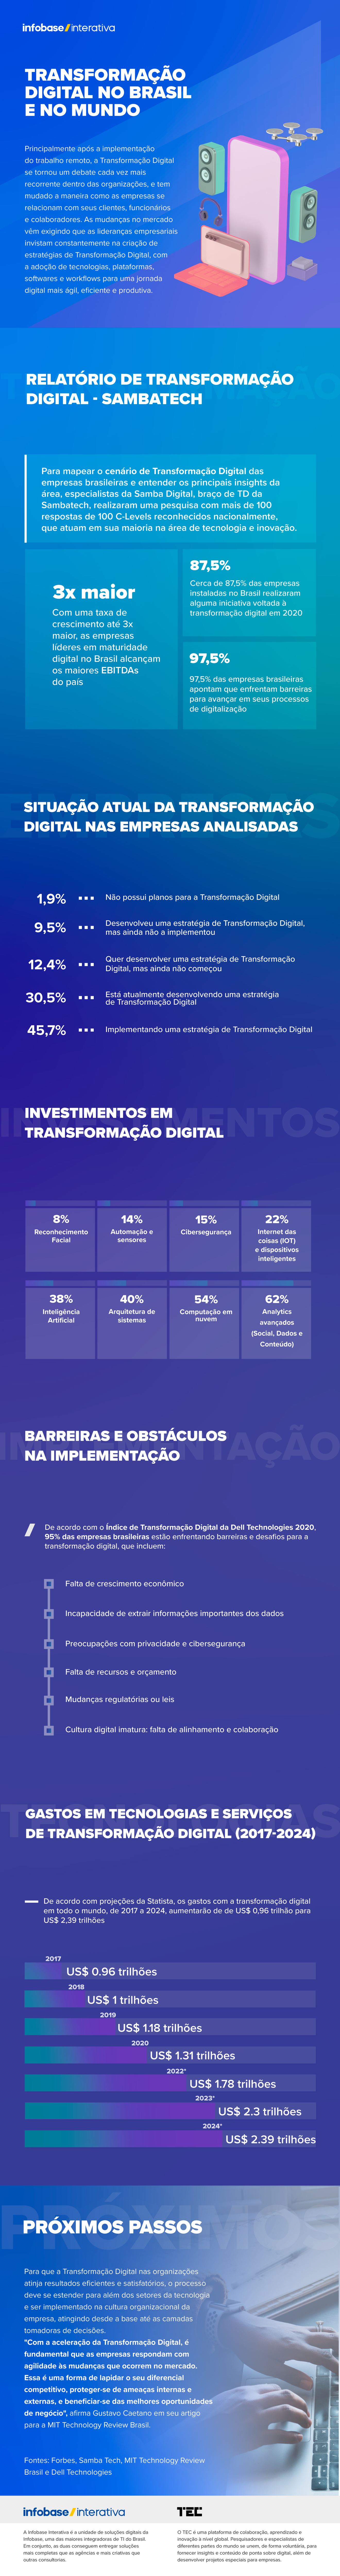 Games e smartphones: a dupla preferida dos brasileiros - Infobase